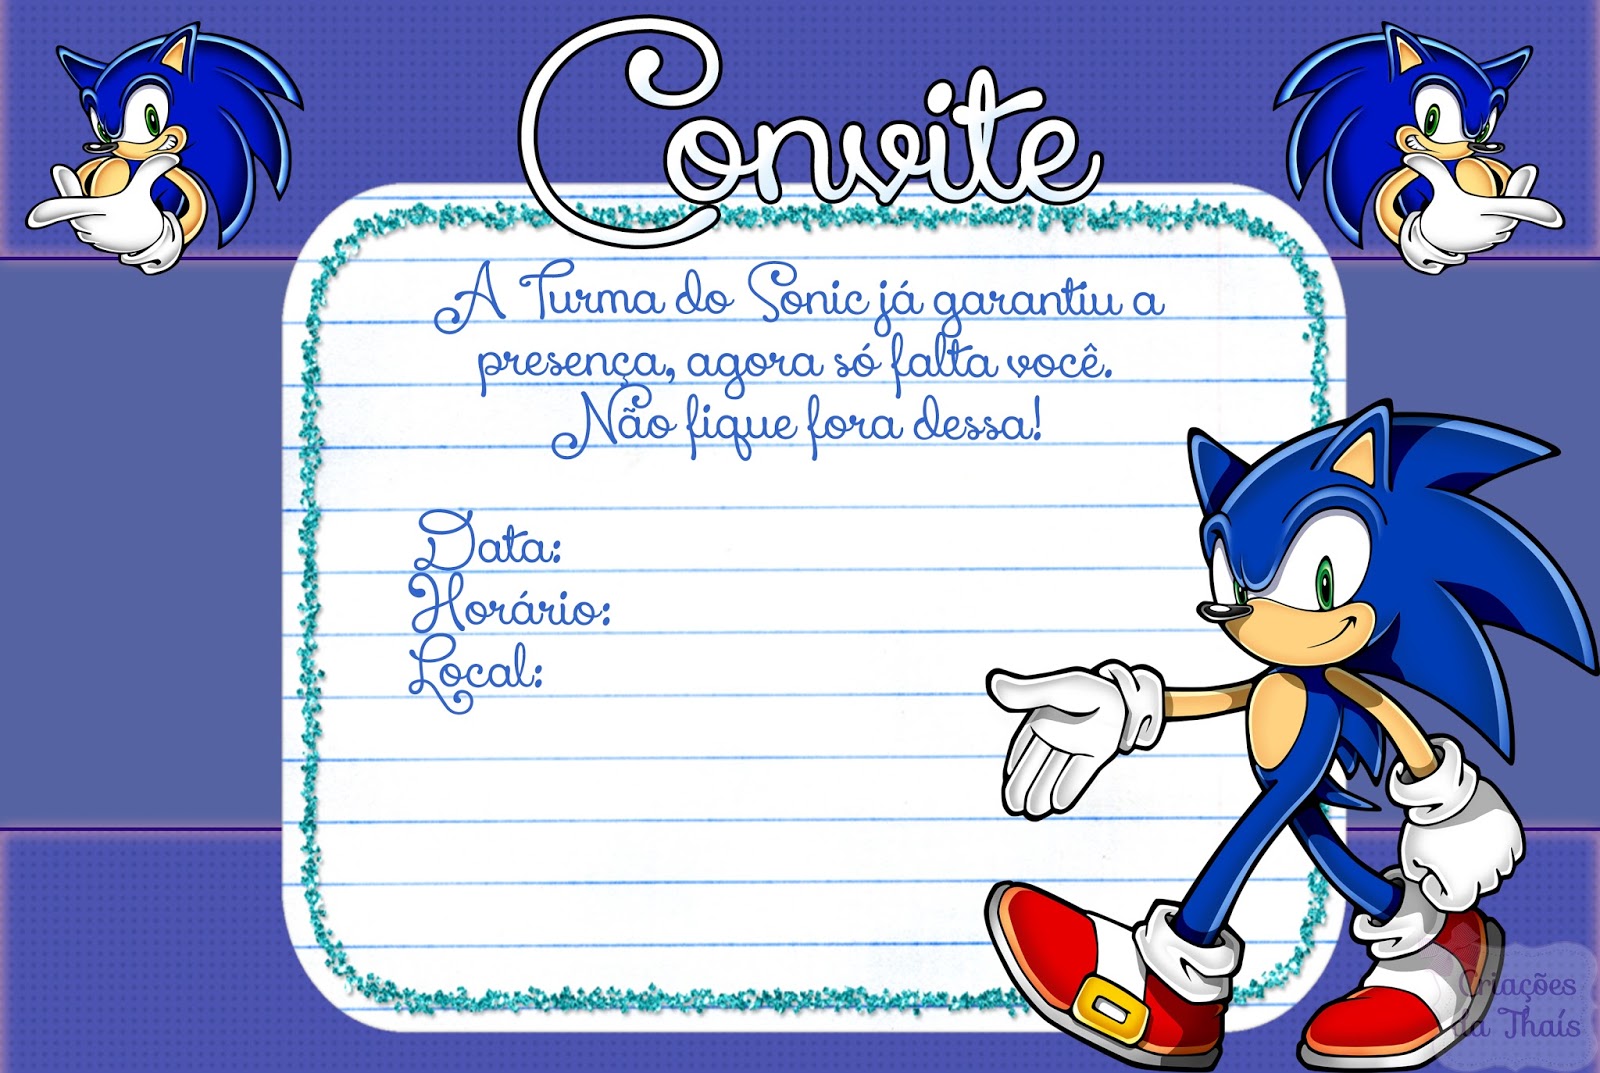 Convite Sonic. - Arcanjo Artes Gráficas